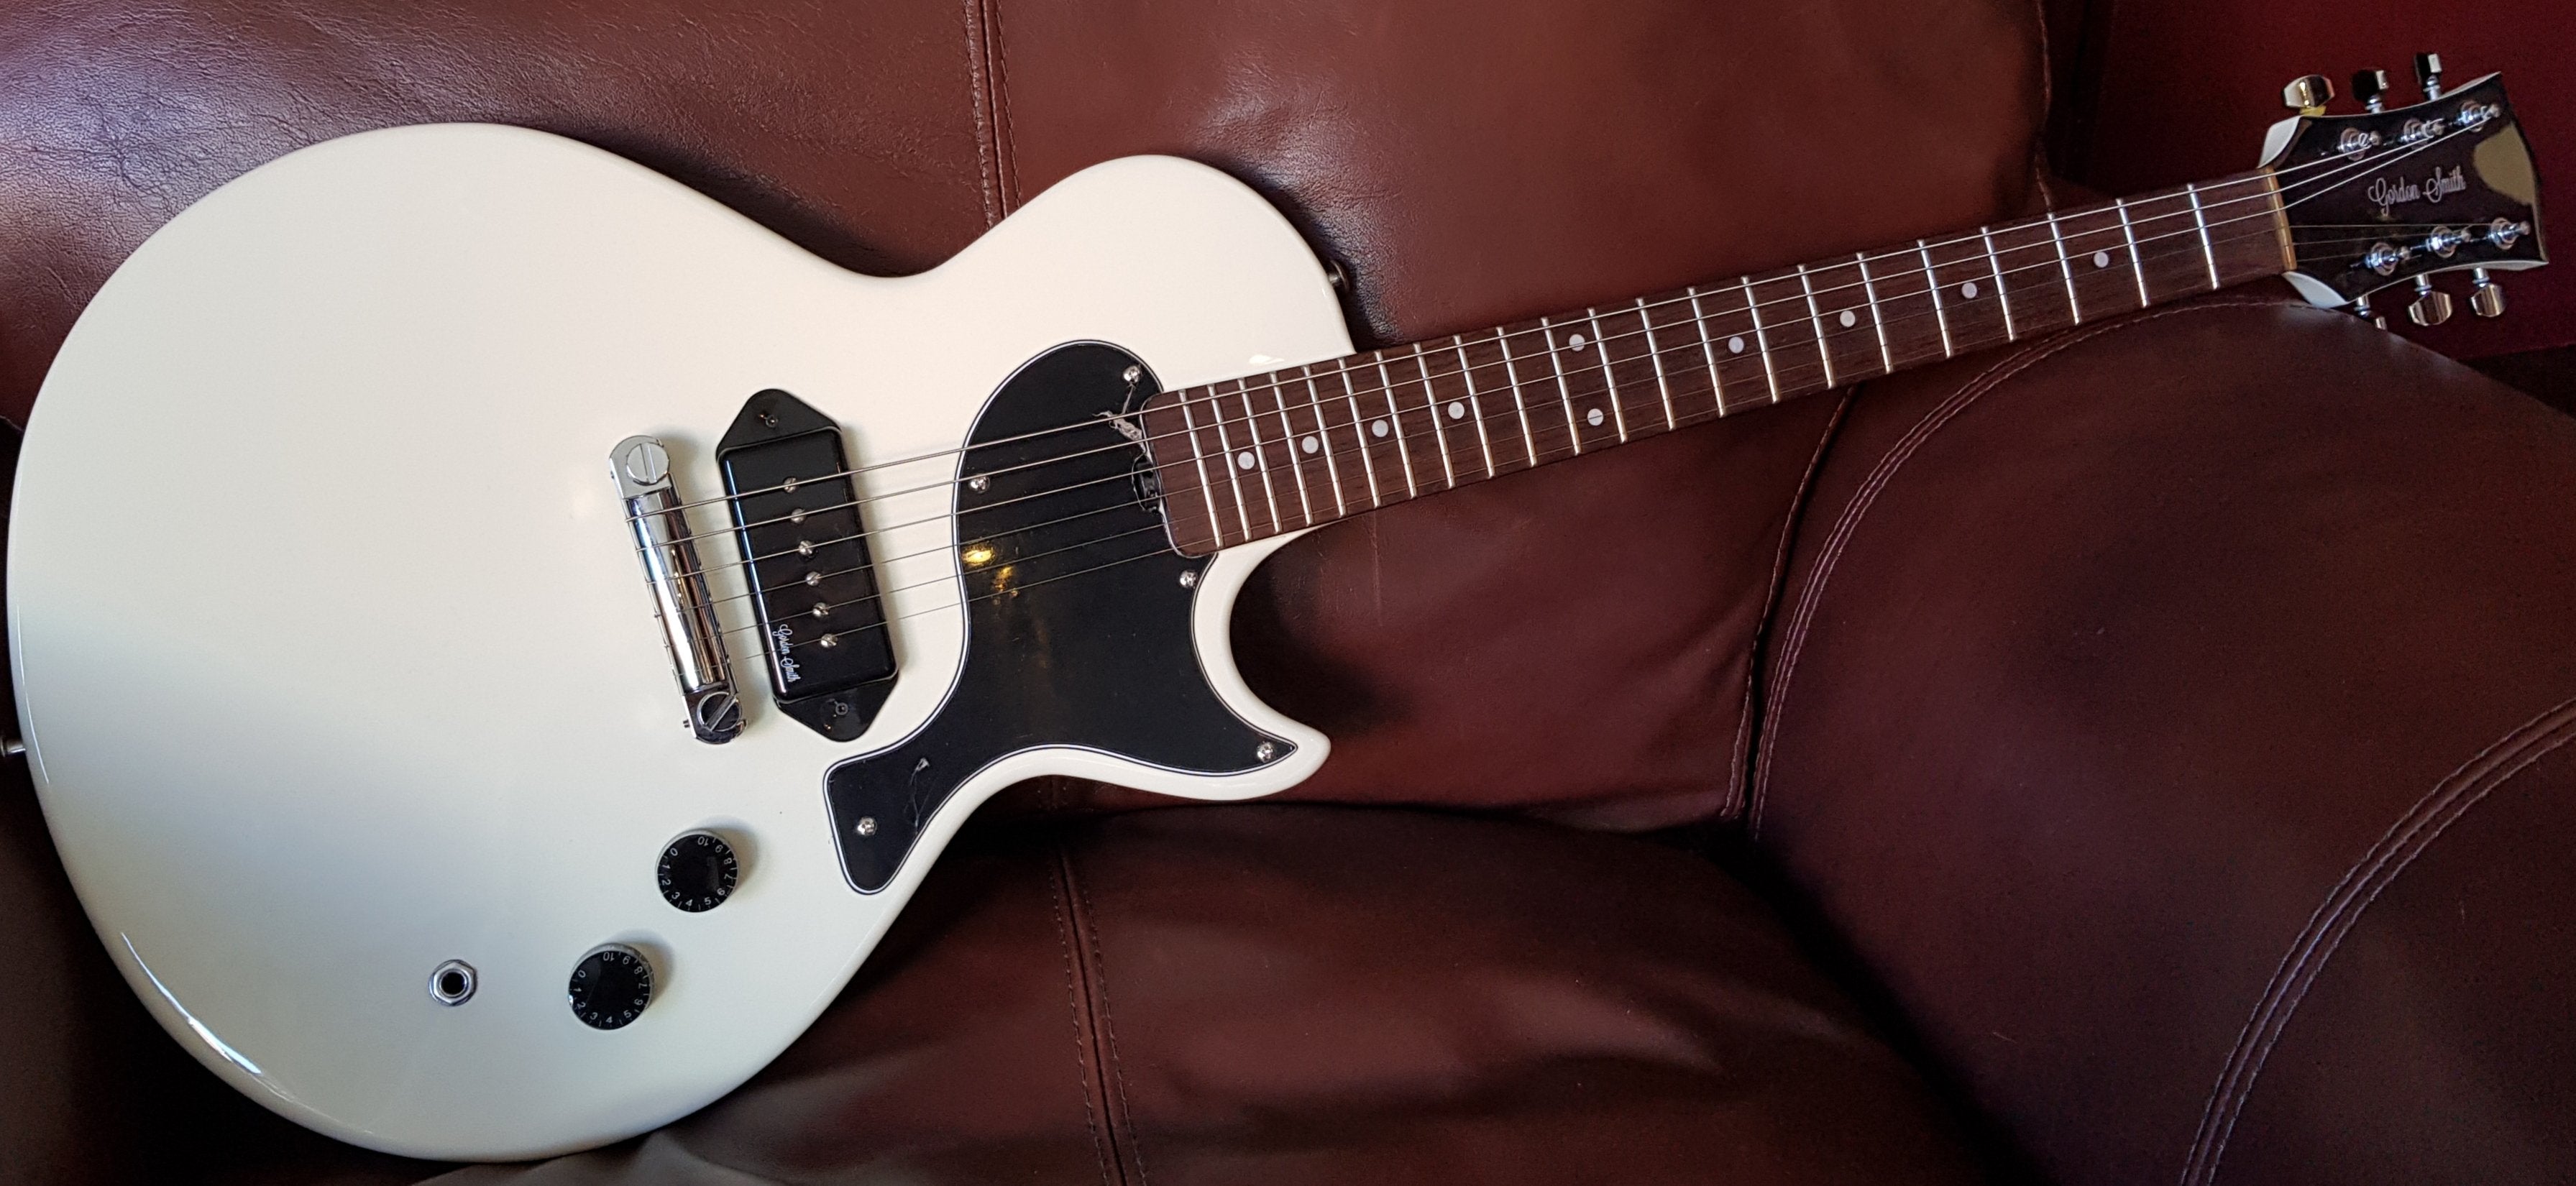 Gordon Smith GS1 P90 Vintage White, Electric Guitar for sale at Richards Guitars.